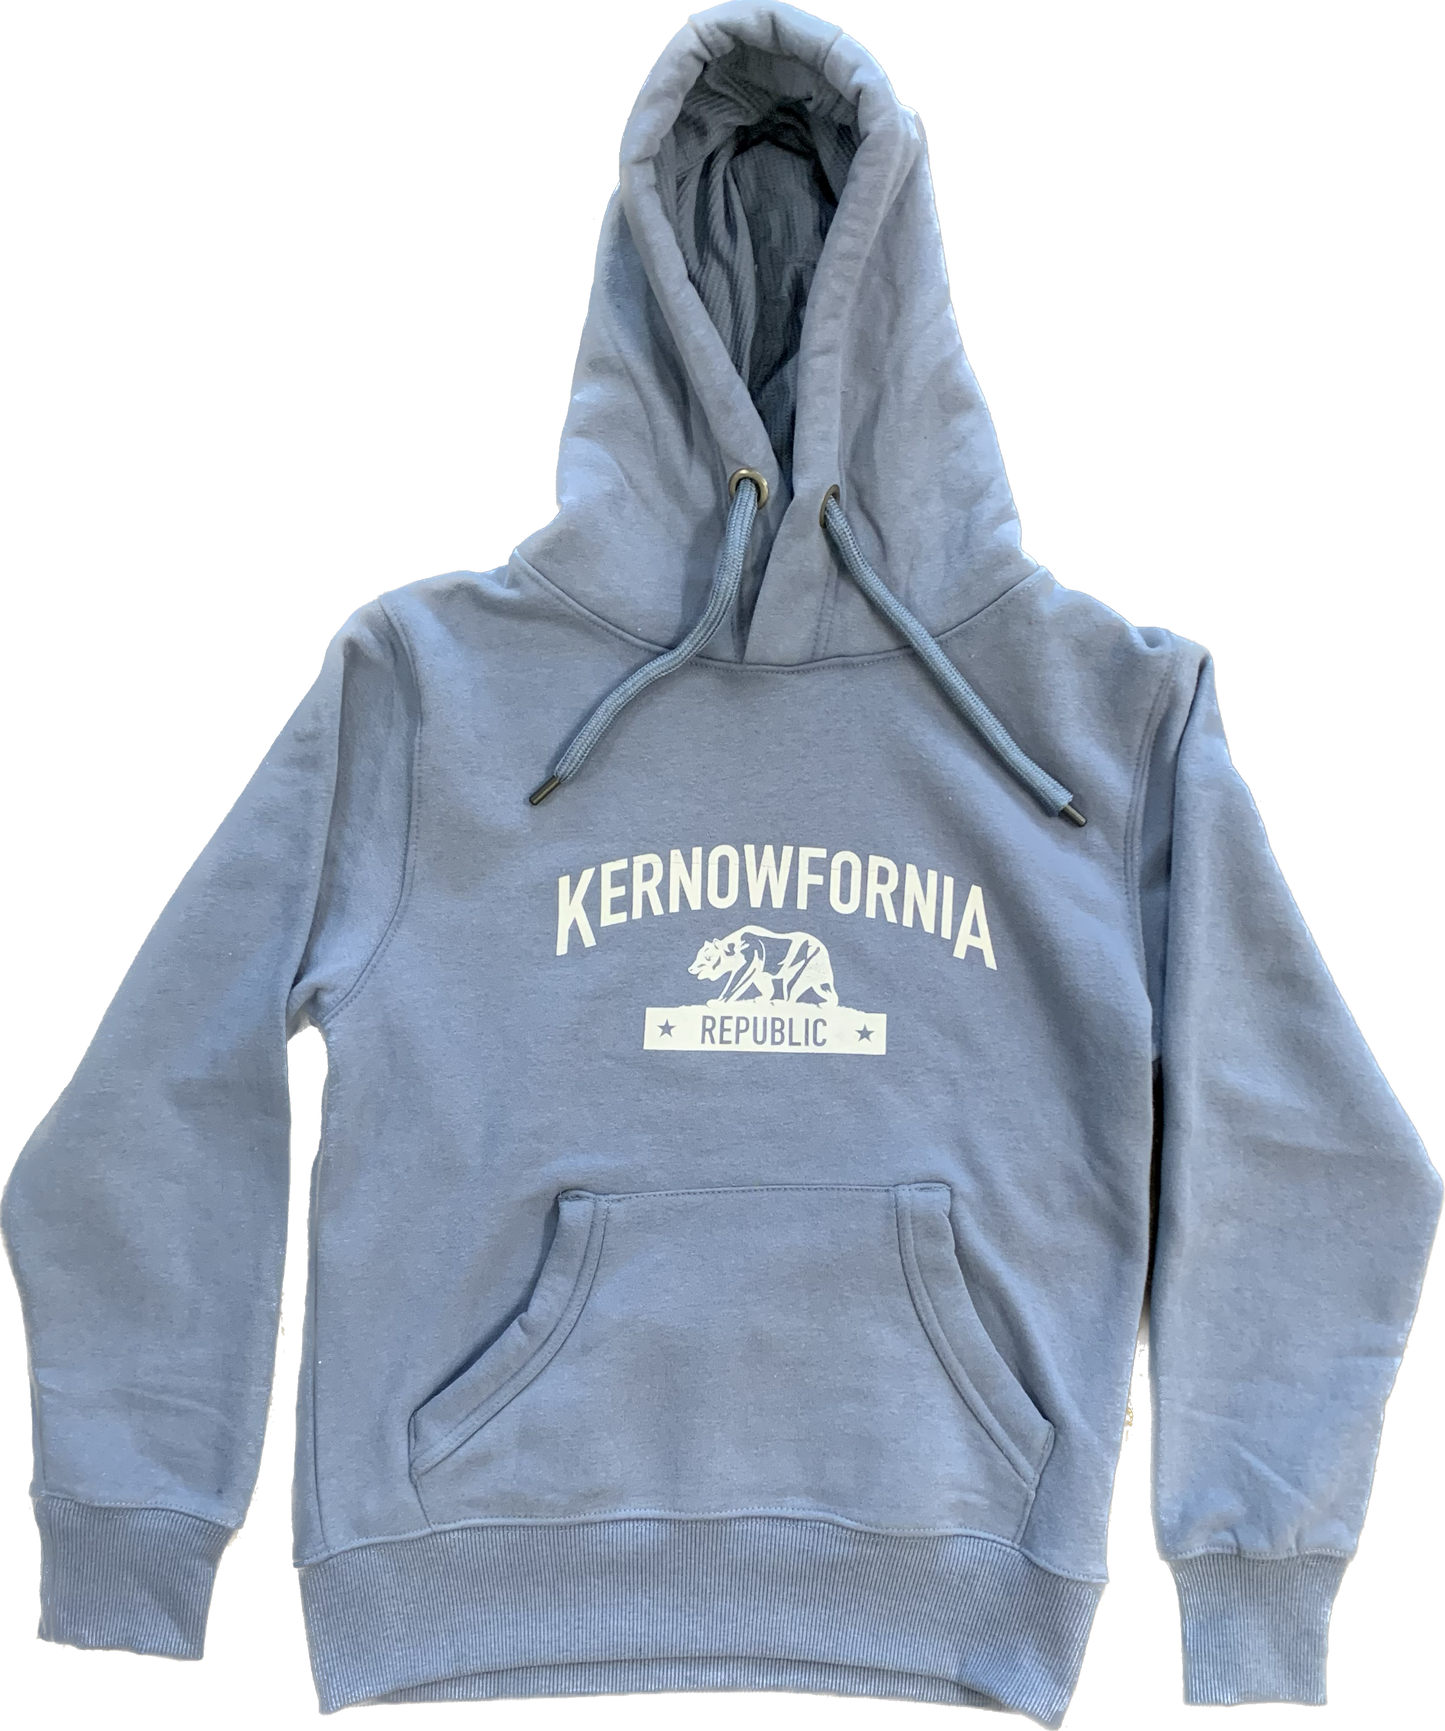 Kernowfornia Republic men’s hoodies